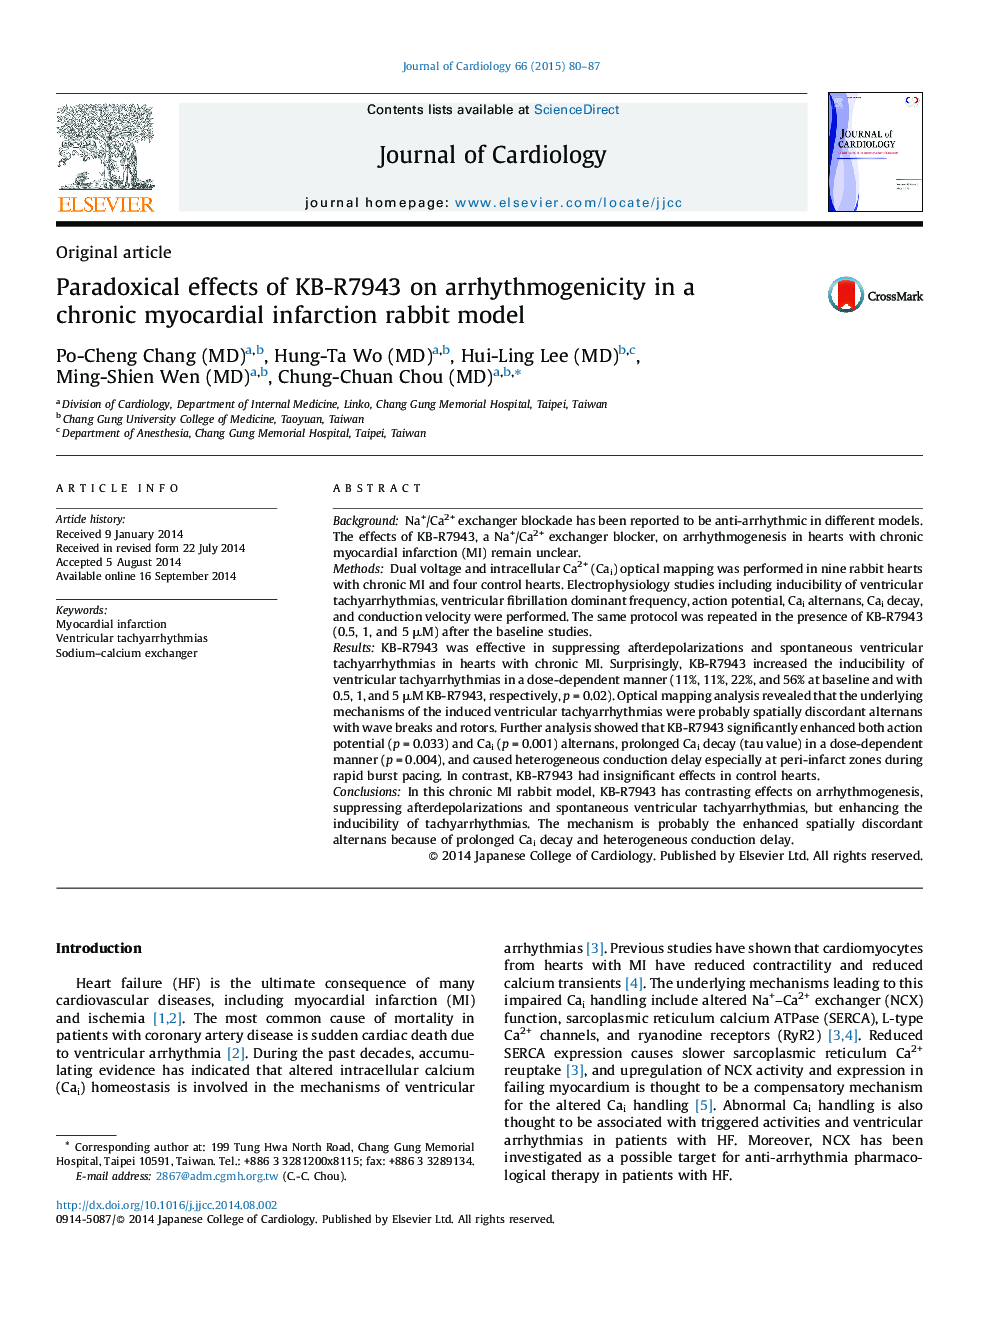 Paradoxical effects of KB-R7943 on arrhythmogenicity in a chronic myocardial infarction rabbit model